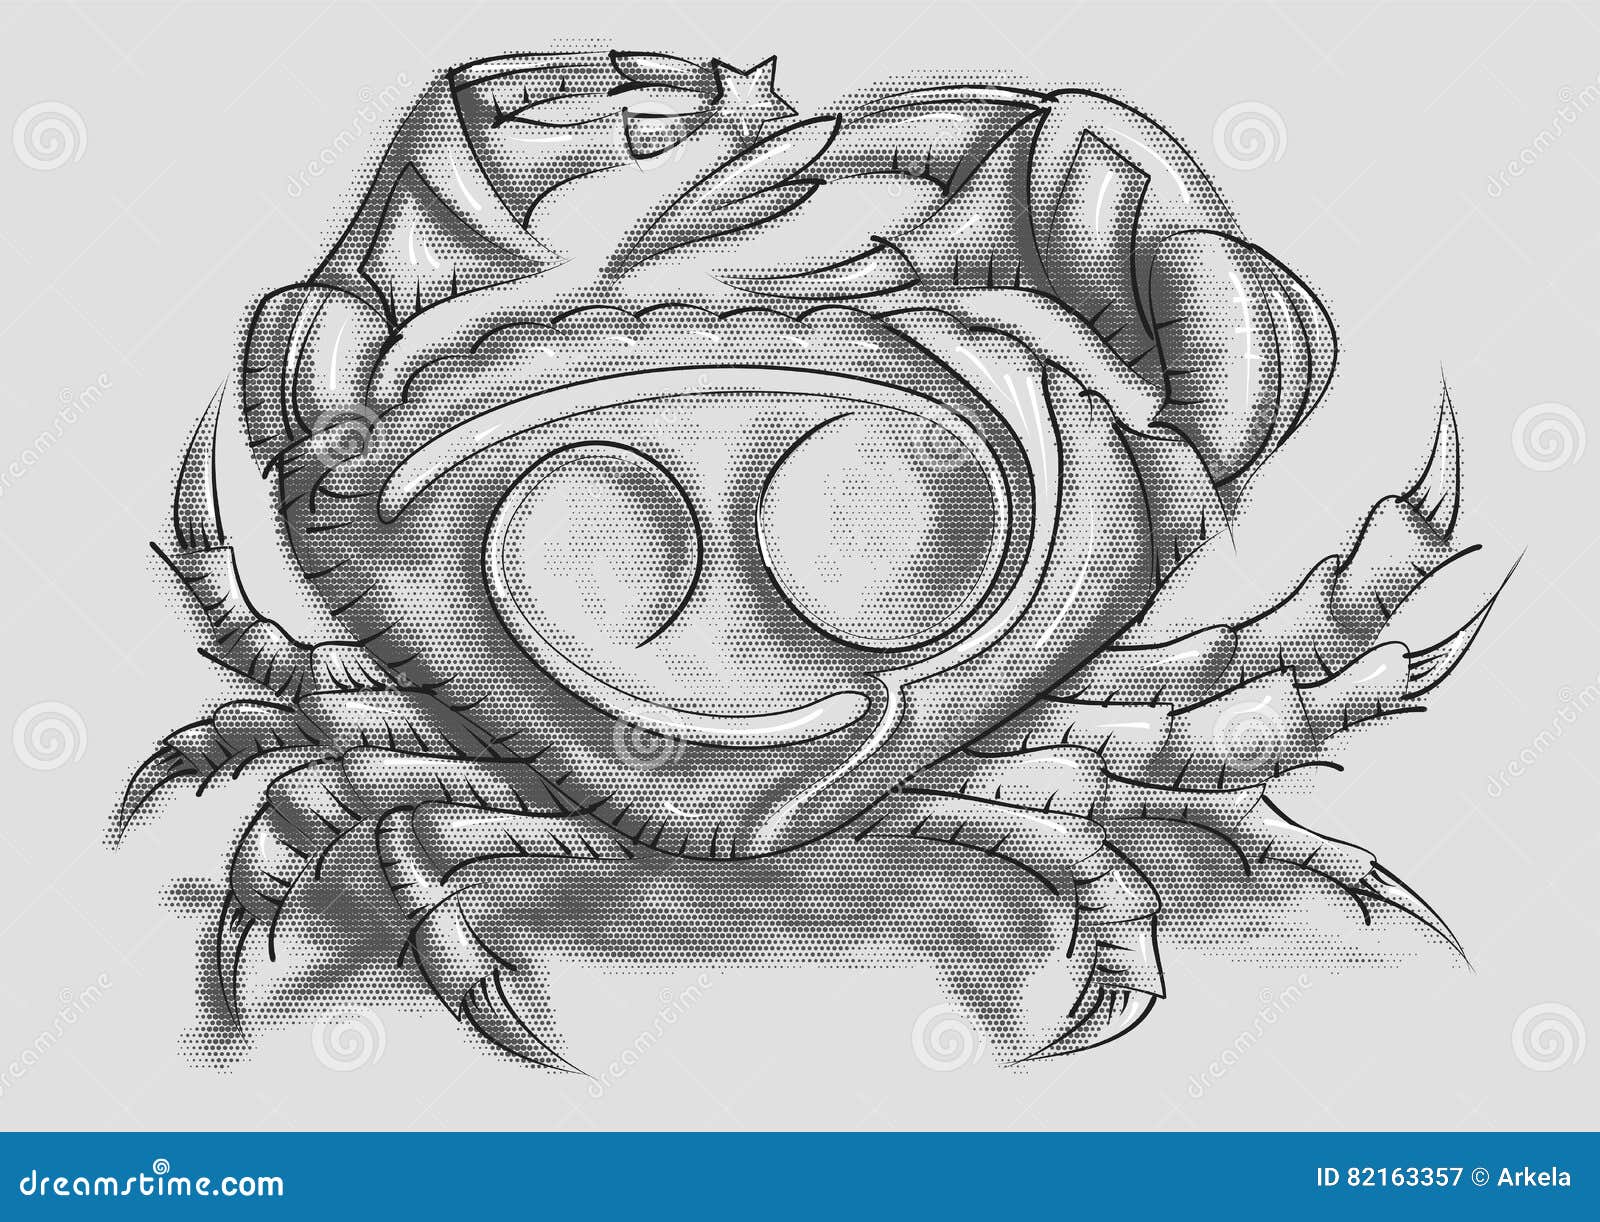 Crab tattoo sketch stock illustration. Illustration of stylized - 82163357